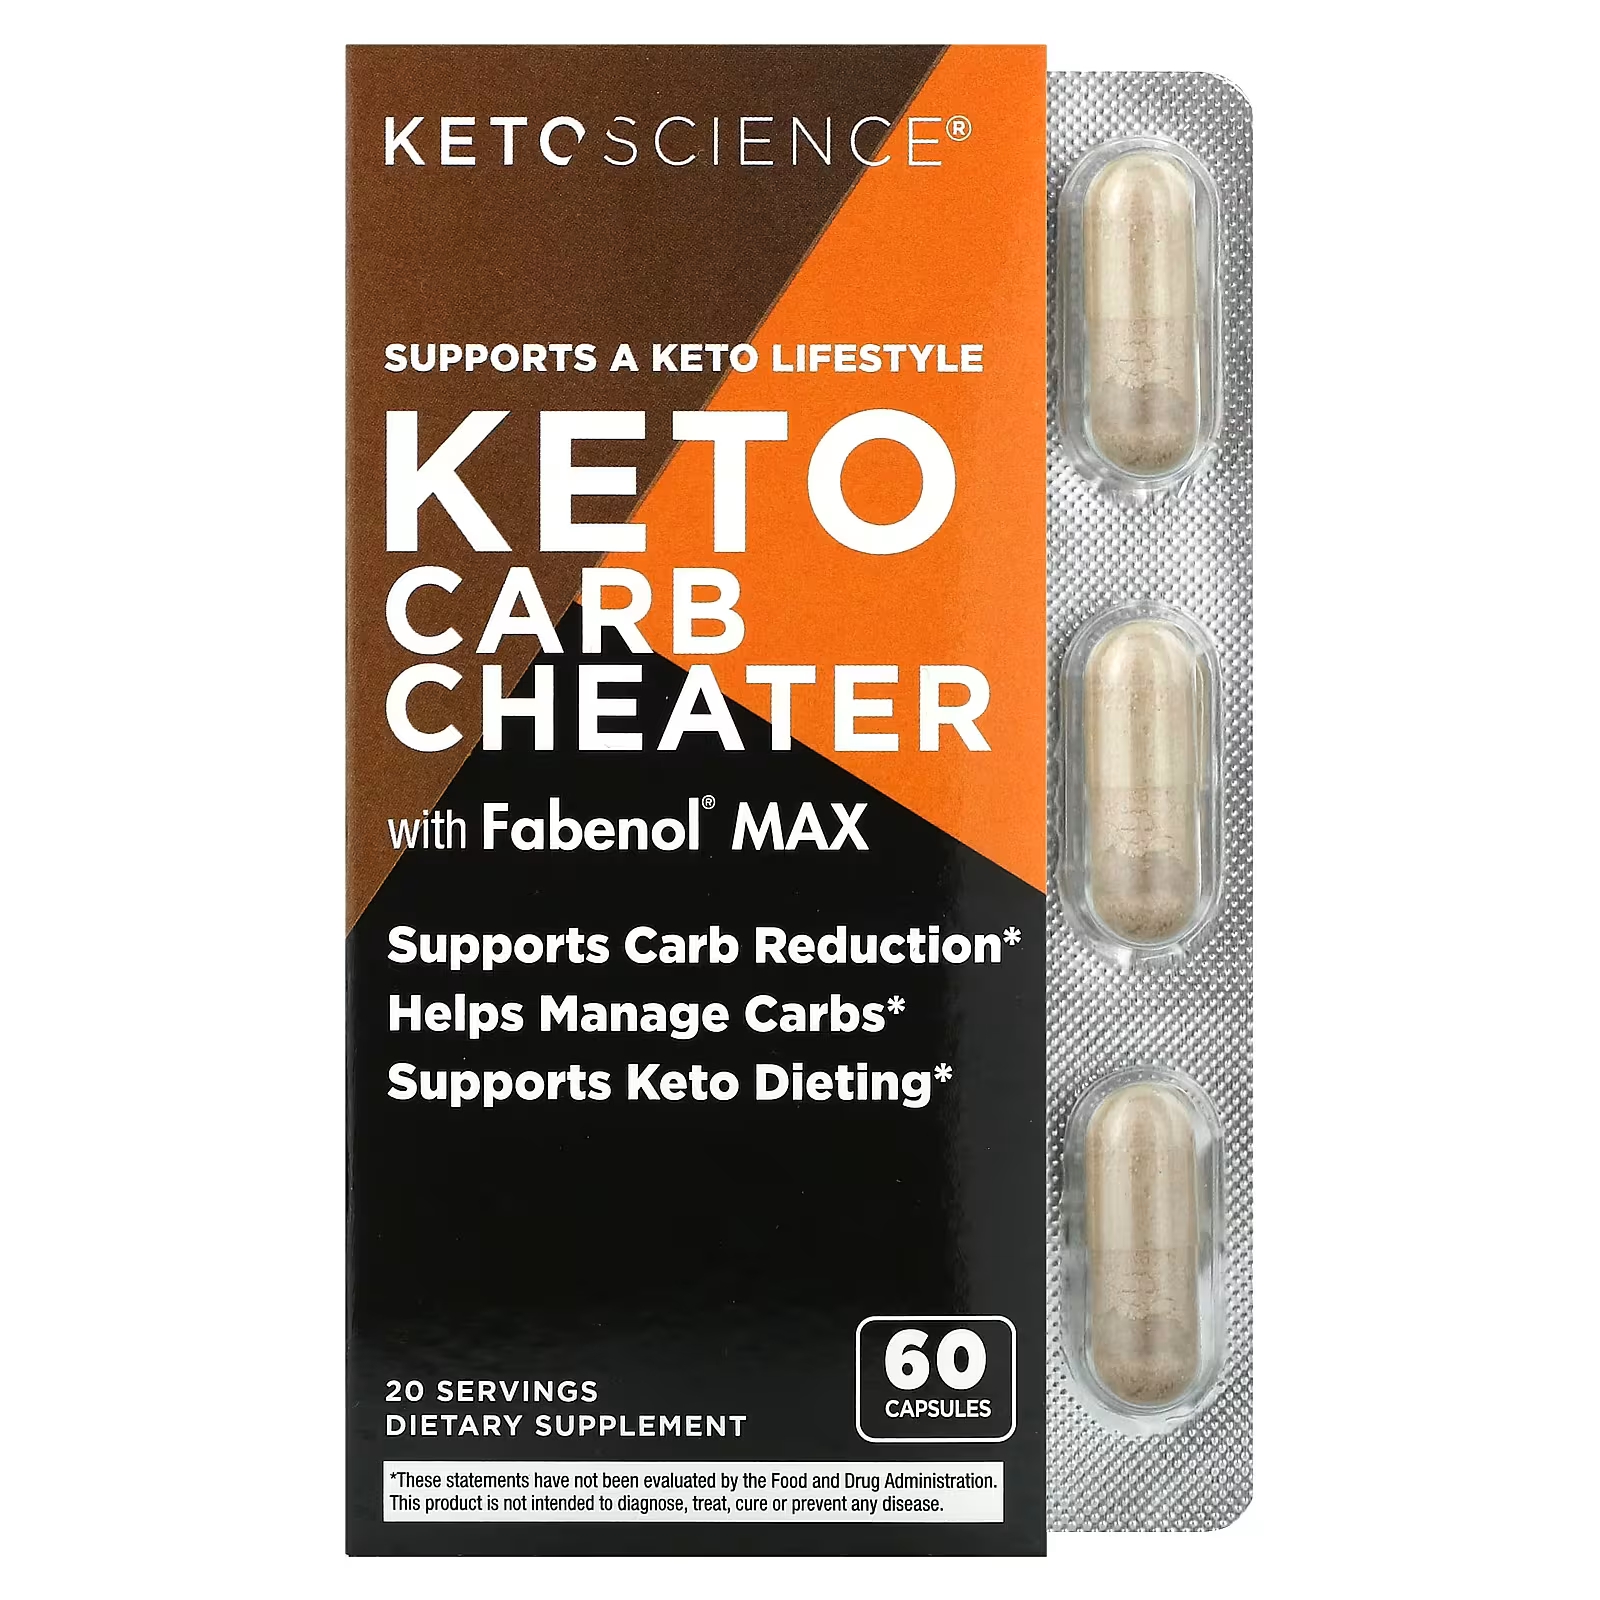 Пищевая добавка Keto Science Keto Carb Cheater & Fabenol Max, 60 капсул keto science keto sugar relief с пренулином 60 капсул